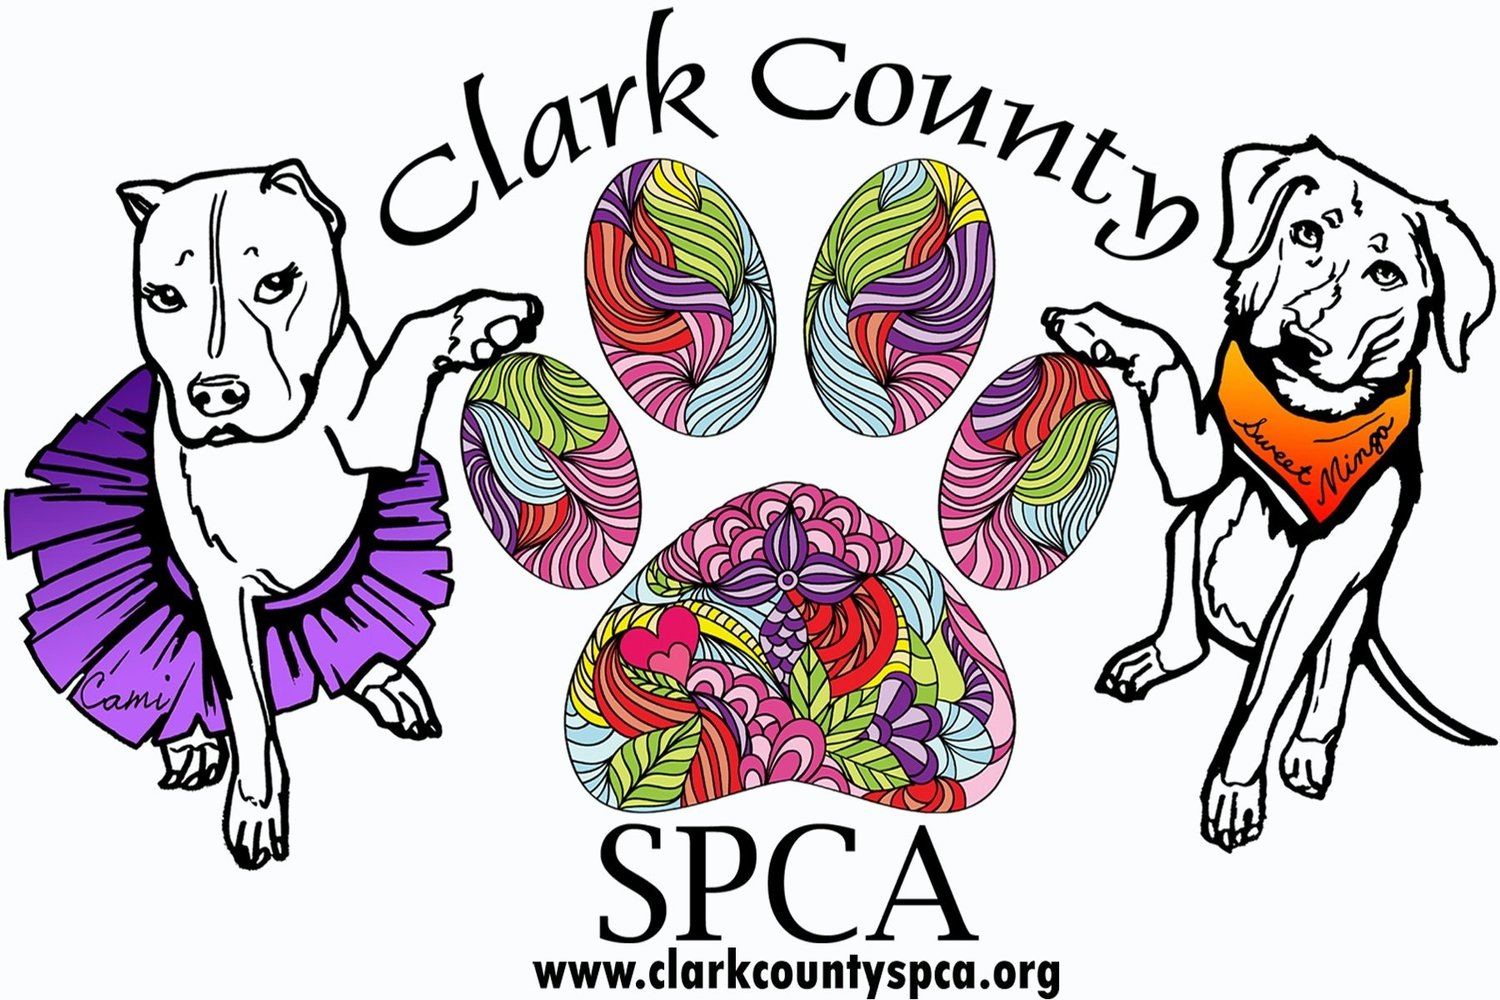 Clark County SPCA